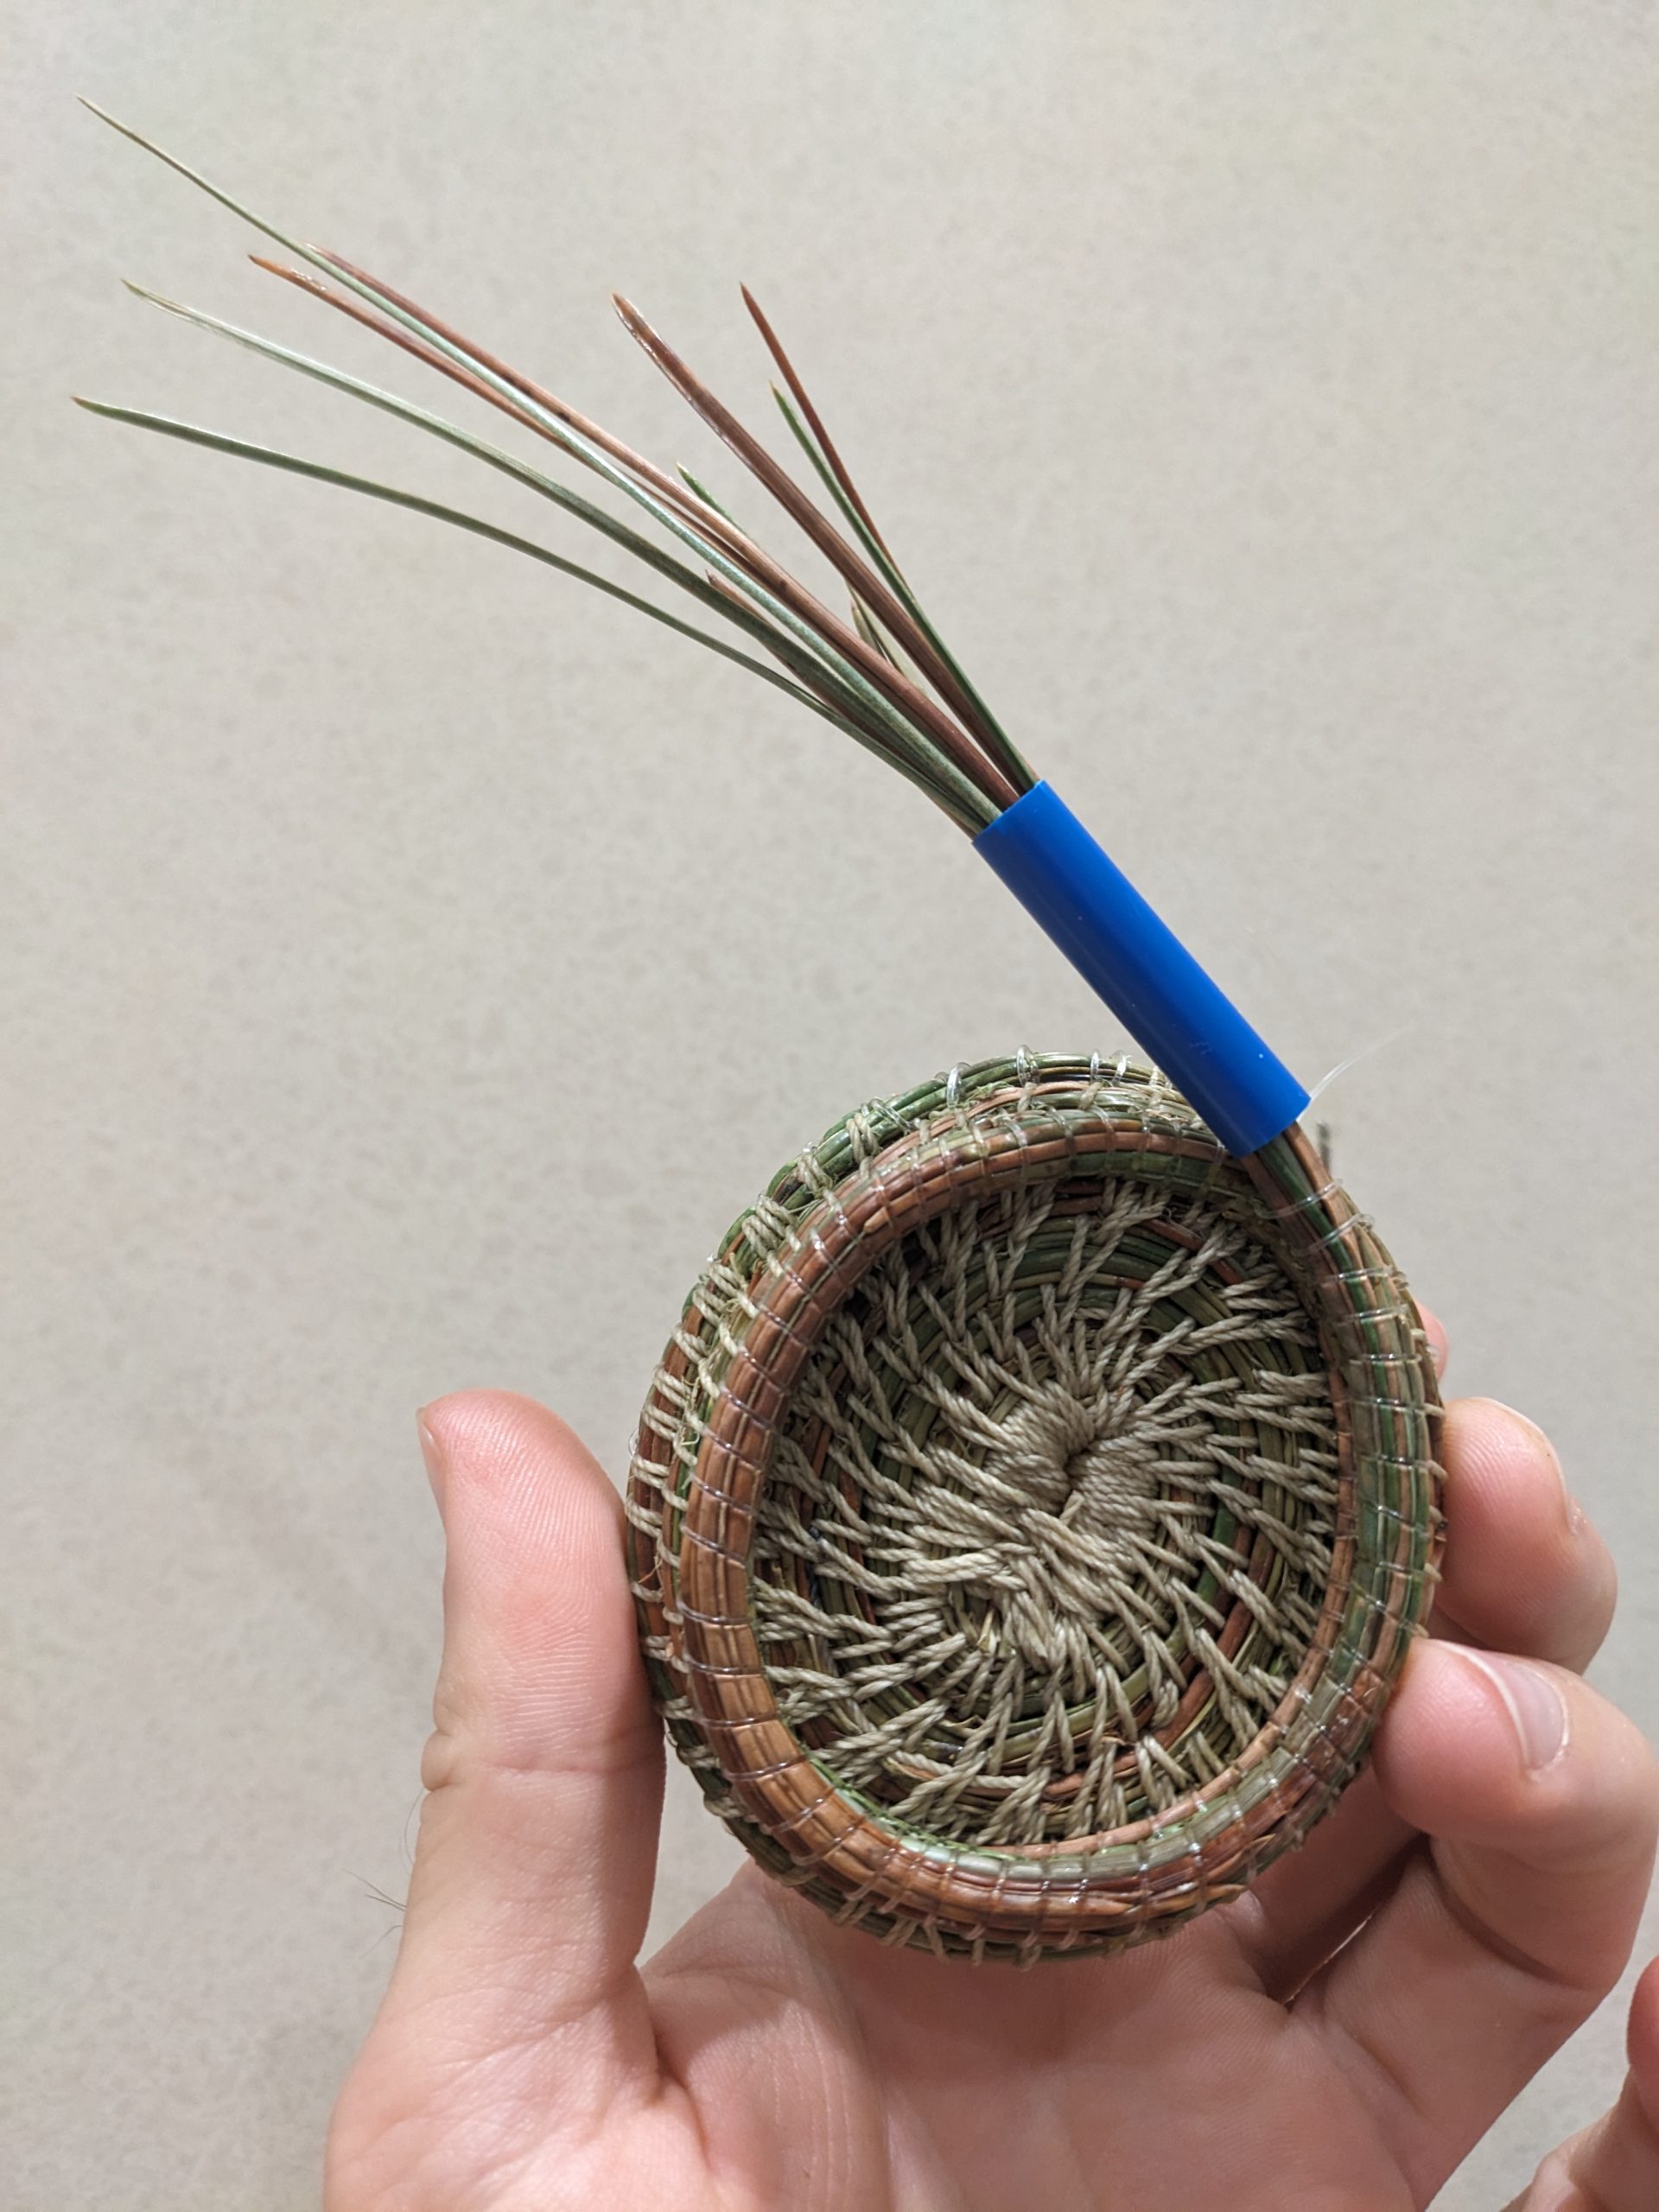 Pine needle basket being woven